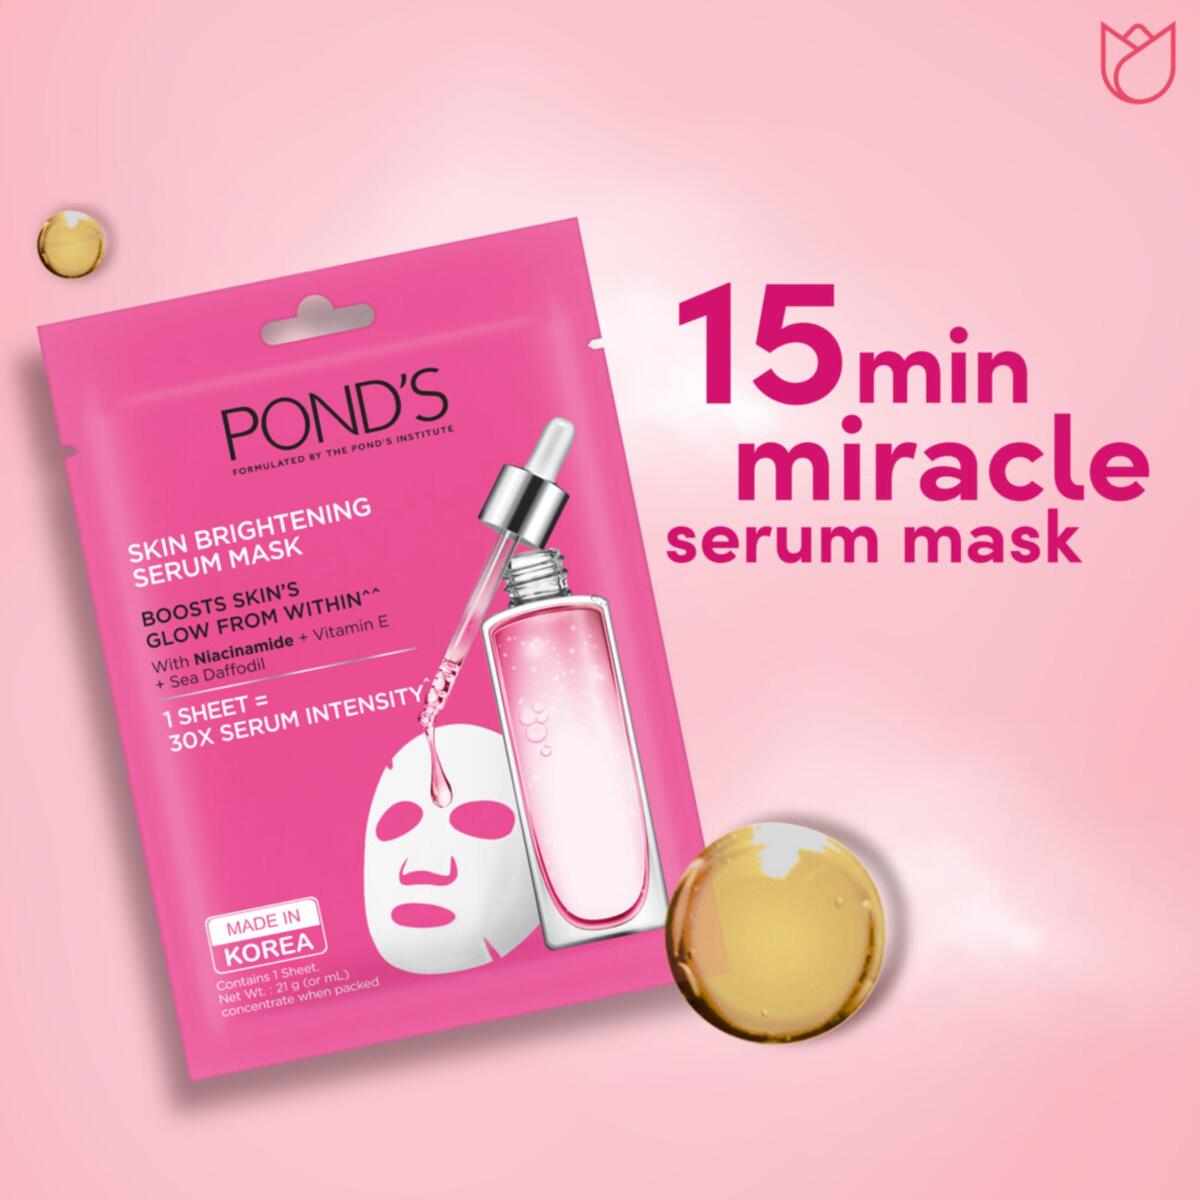 Ponds Face Mask Skin Brightening Serum Mask 21 ml